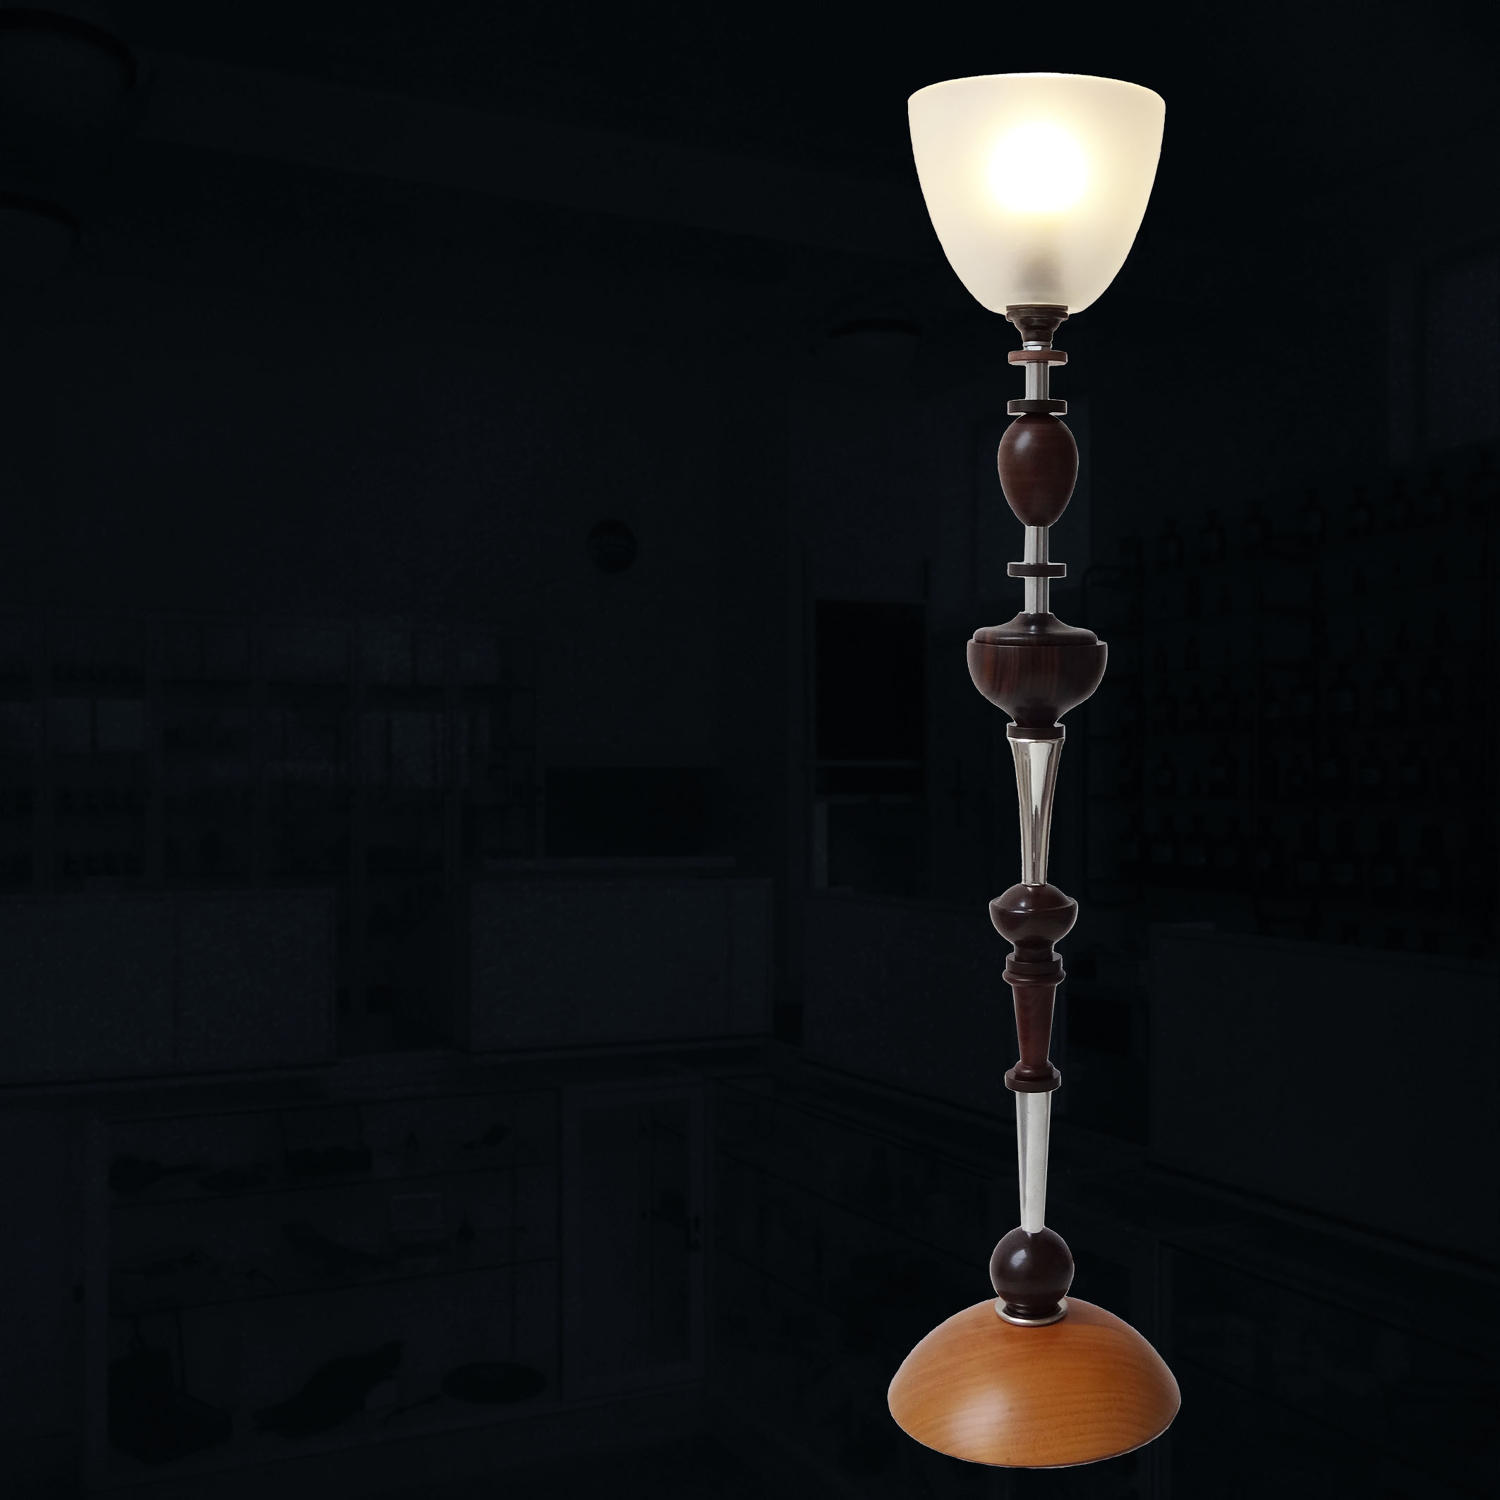 Collectible unique lamp - Hortensia - by Gilles Bourlet Dartmouth